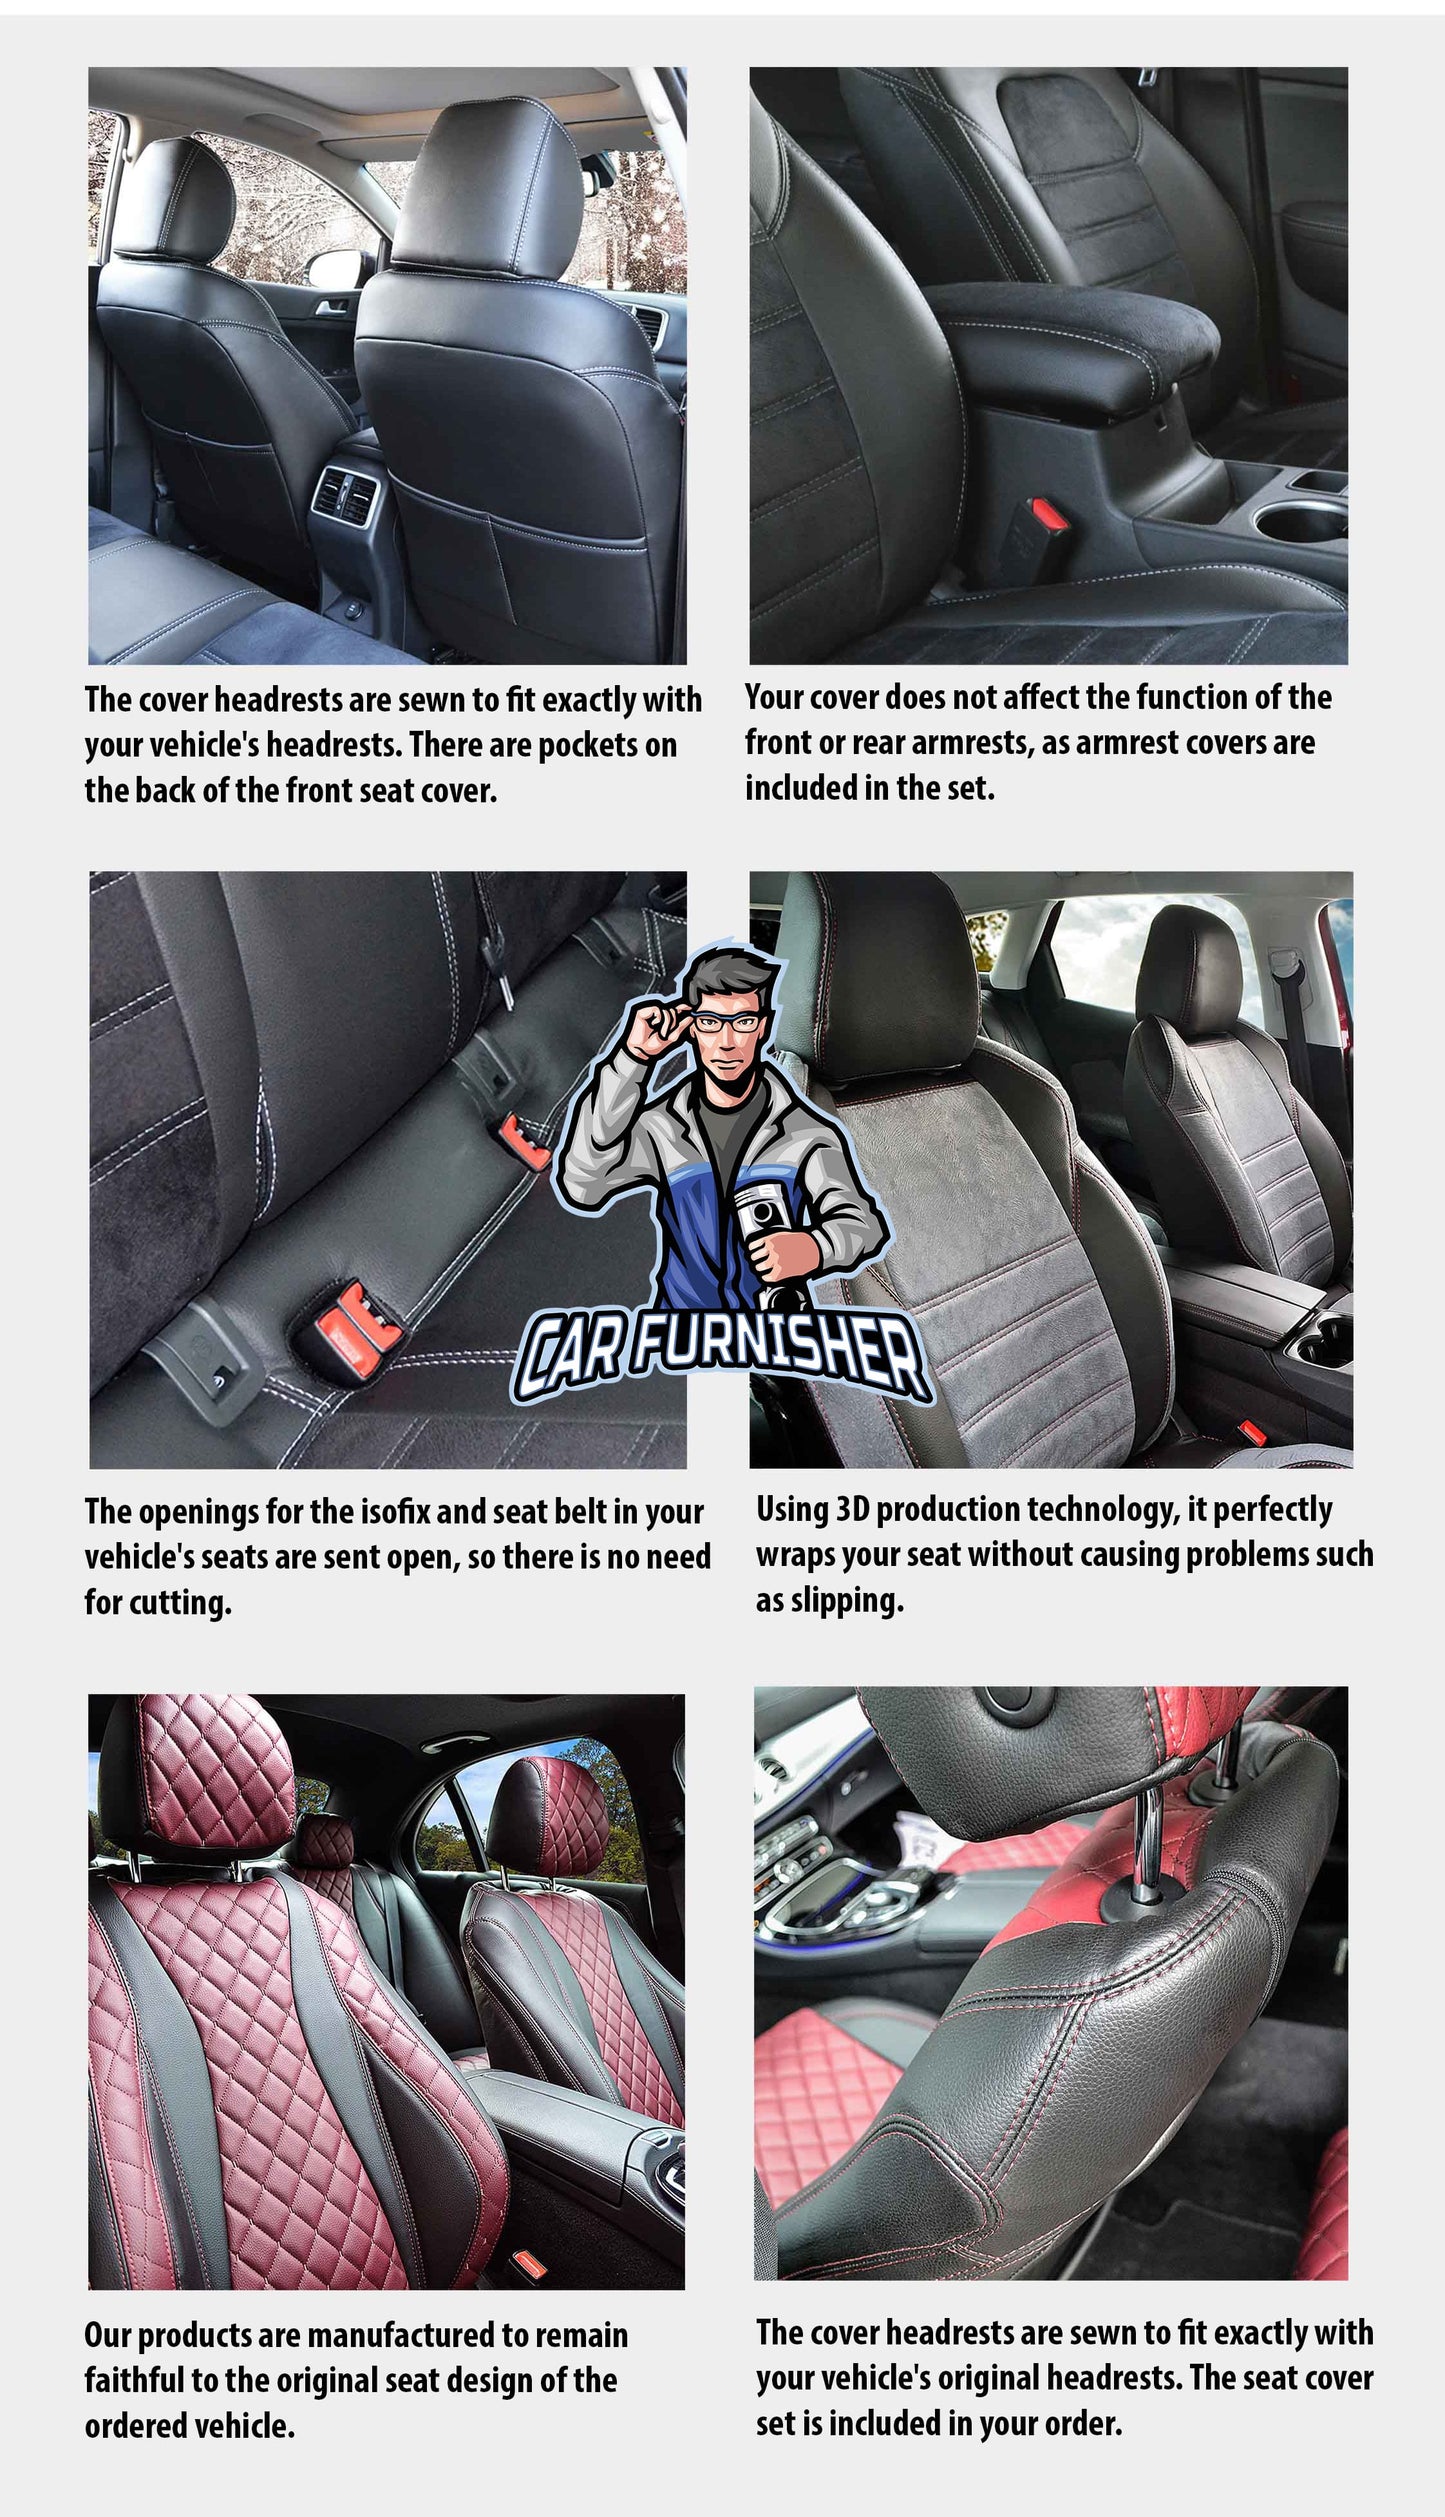 Honda HRV Seat Covers Amsterdam Leather Design Dark Gray Leather